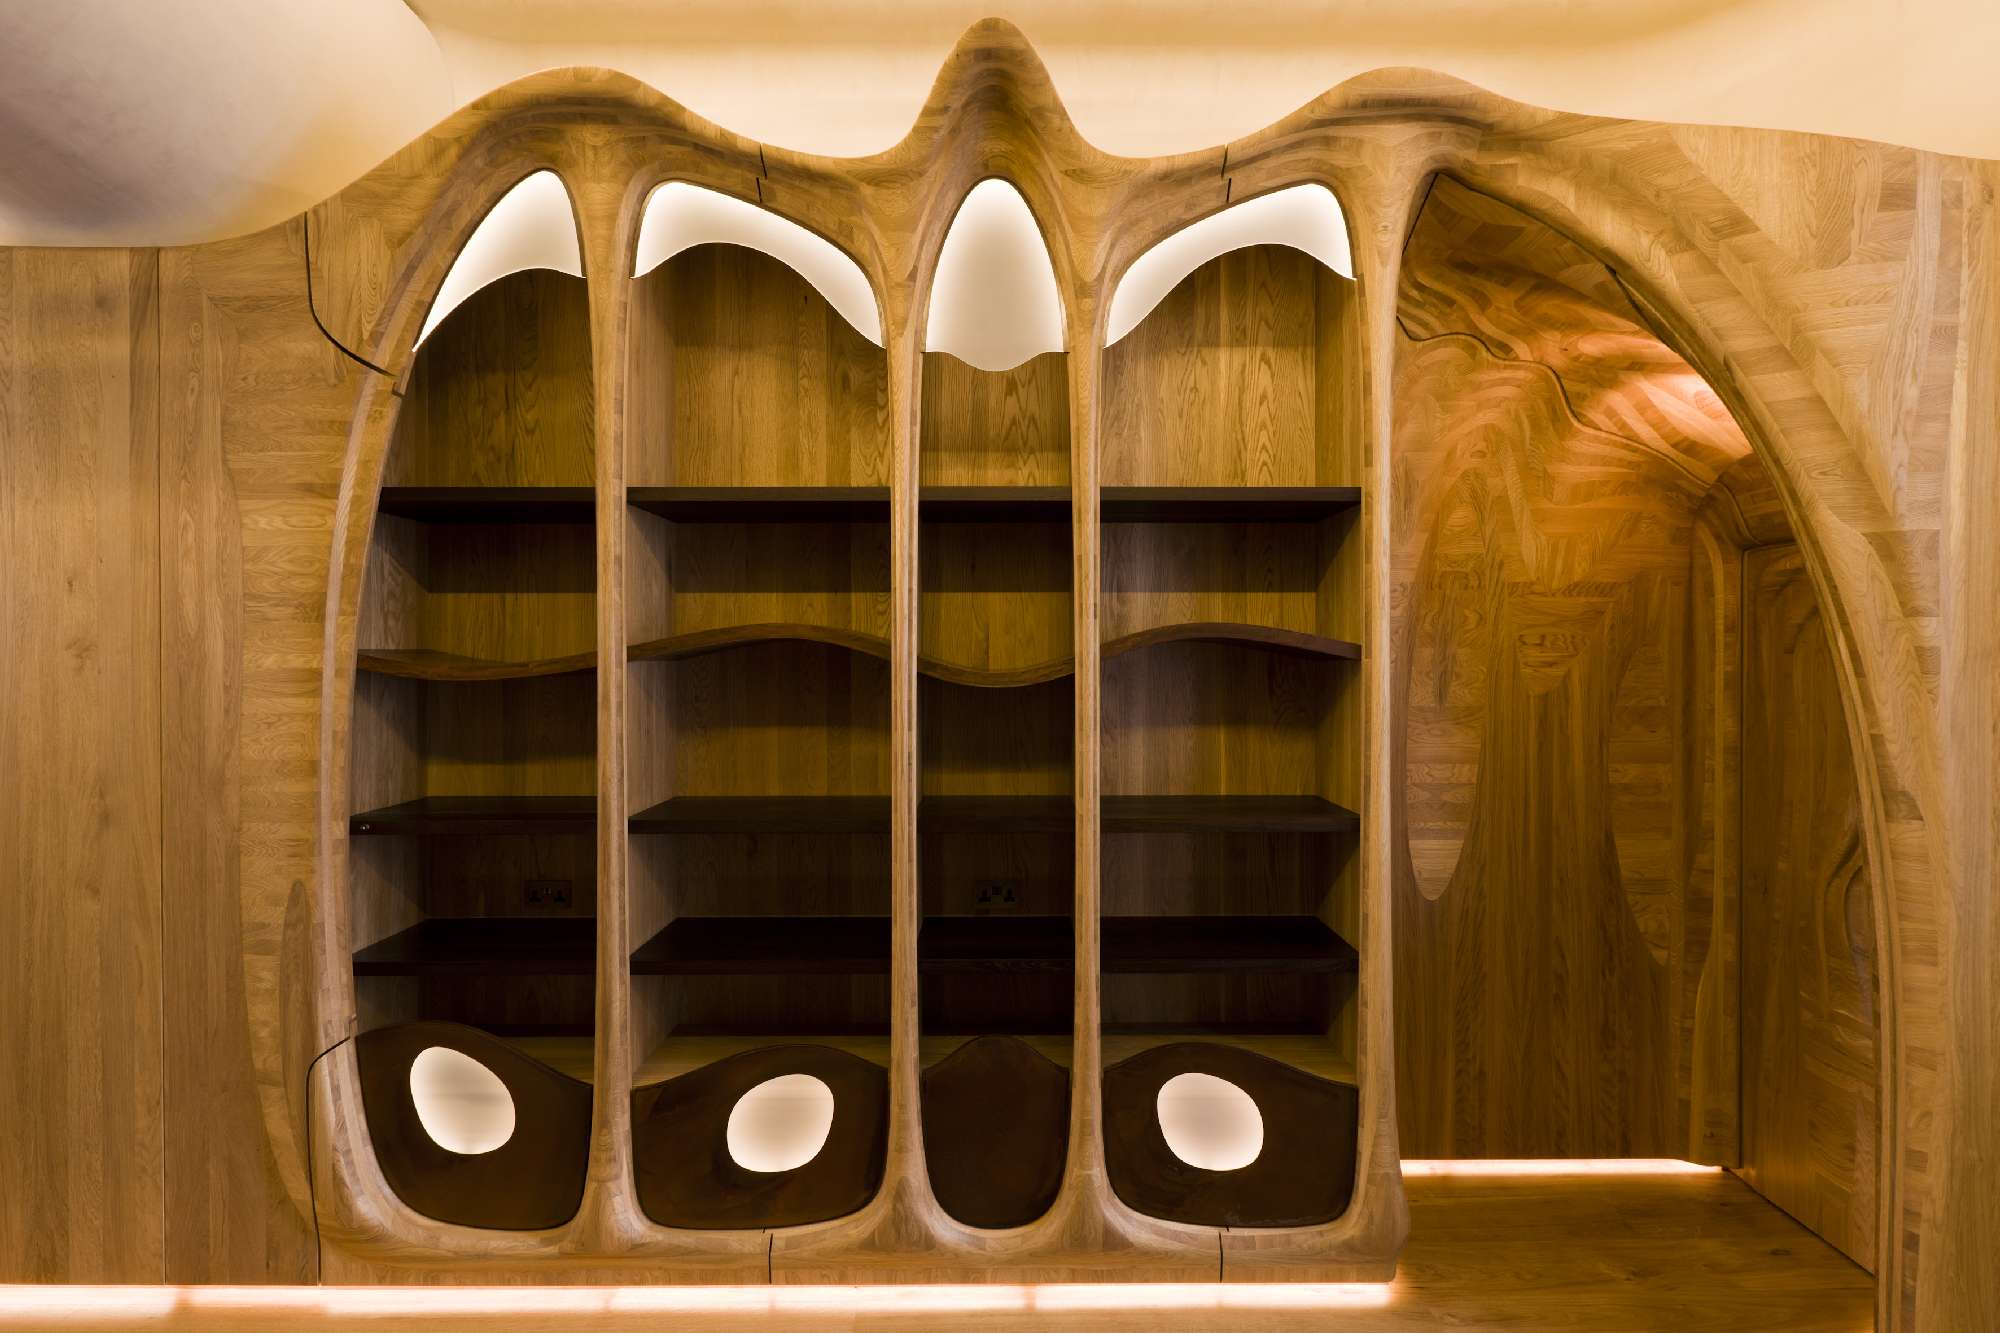 03 Gaudi-Bibliothek - Front+Durchgang.jpg